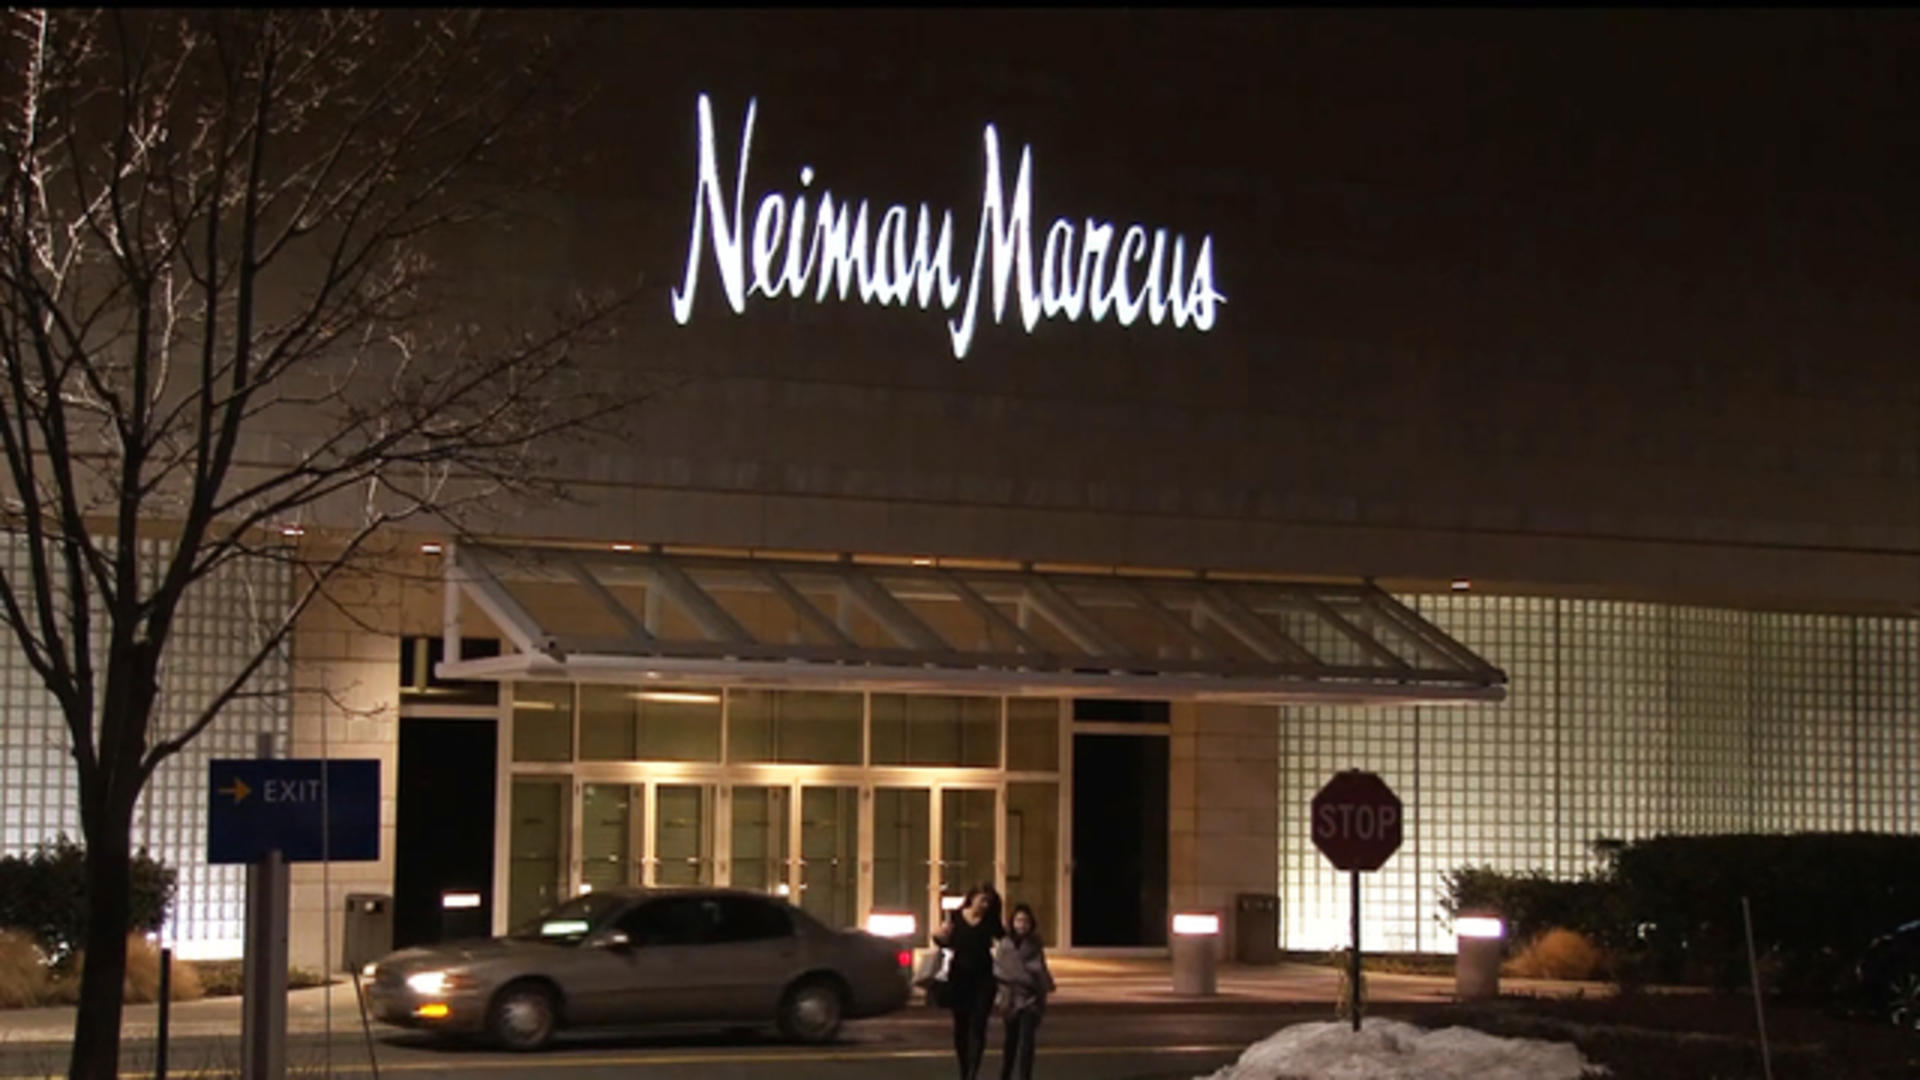 Take a sneak peek inside Neiman Marcus' new Fort Worth store